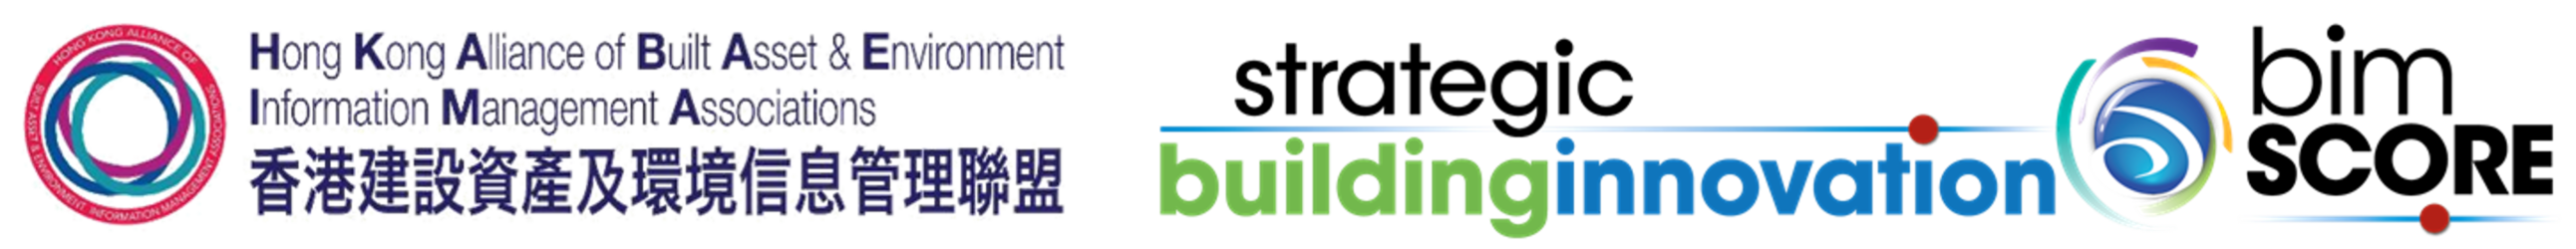 buildingSMART Professional Certification